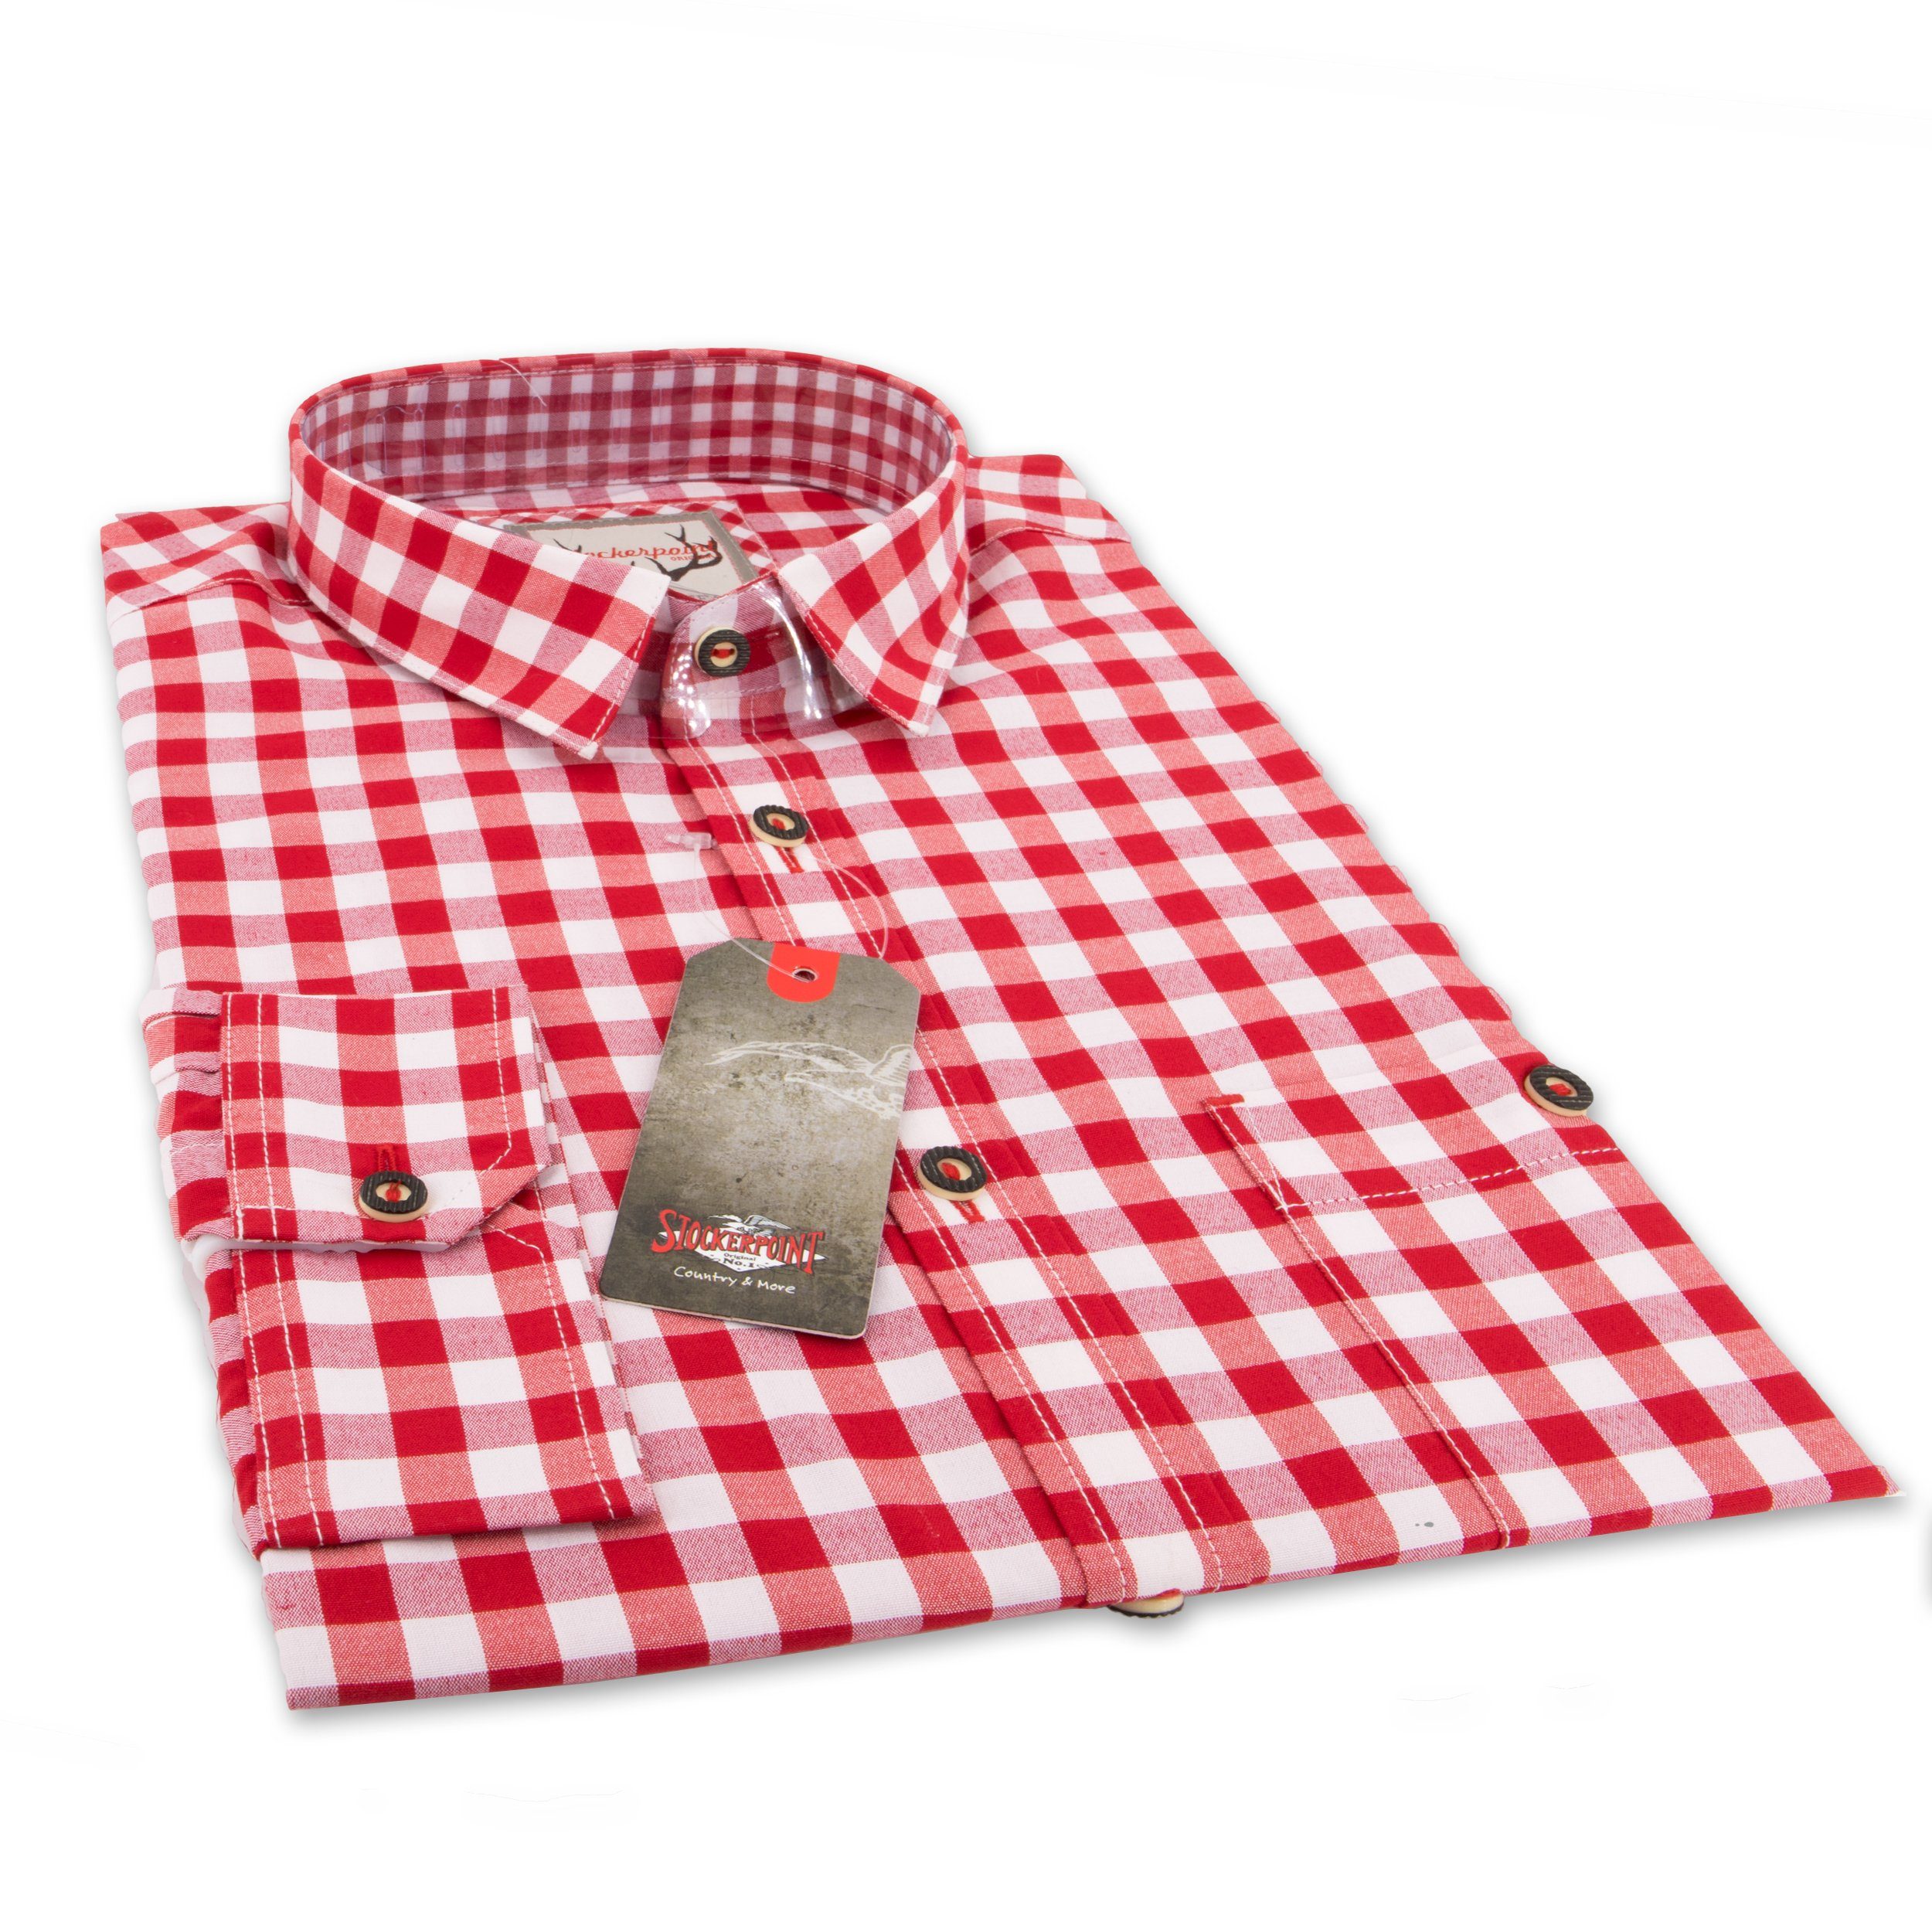 Stockerpoint Trachtenhemd Trachtenhemd OC-Franzl, kariert, Rot modern Fit